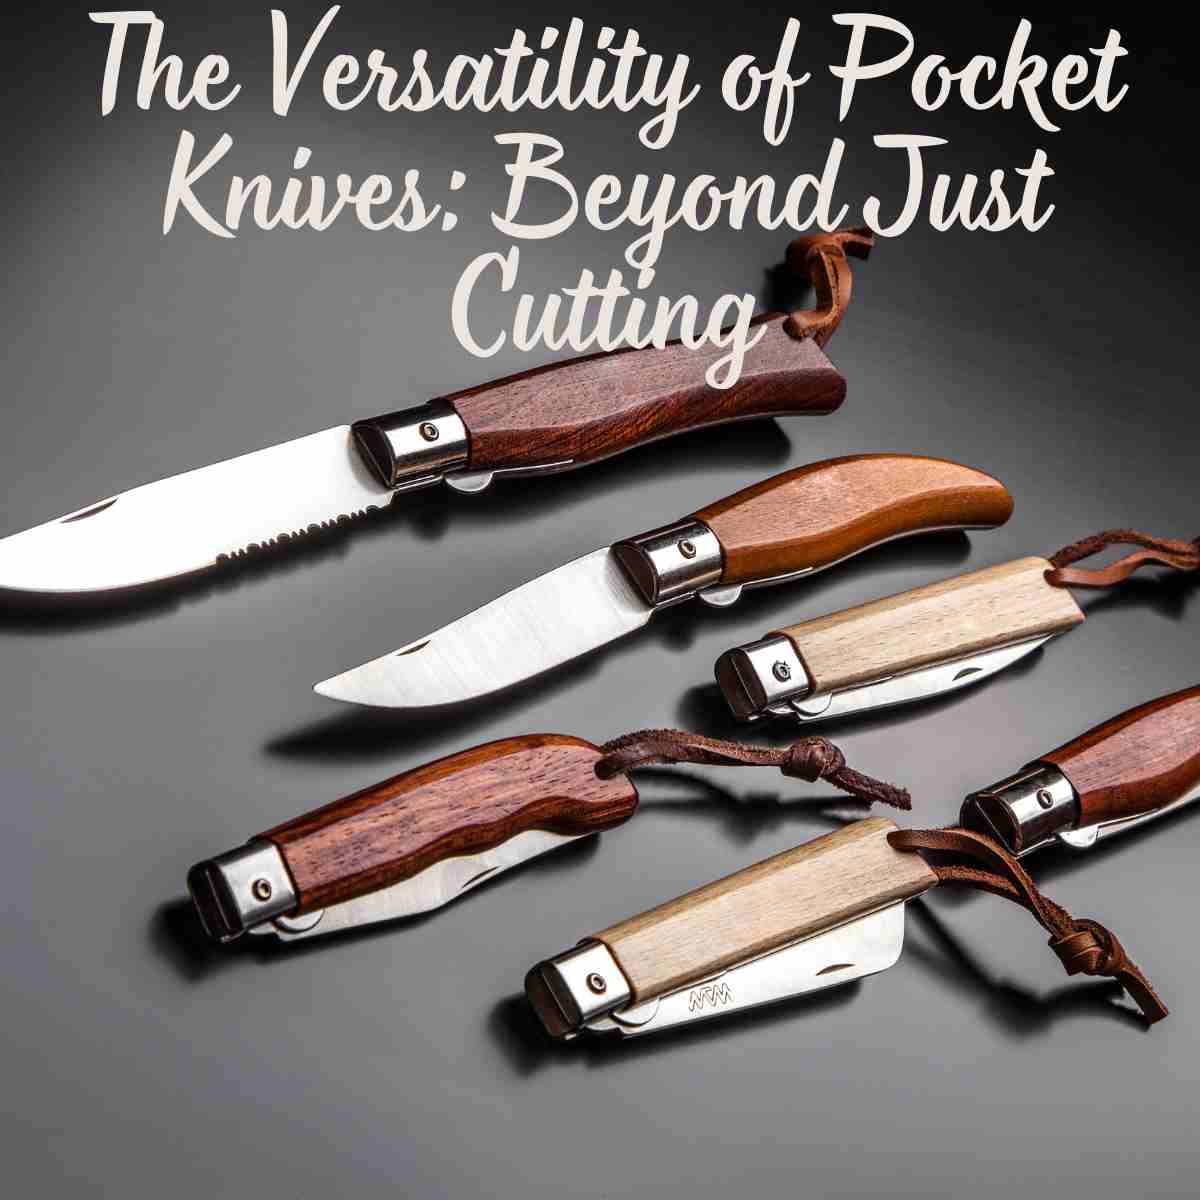 The Versatility of Pocket Knives